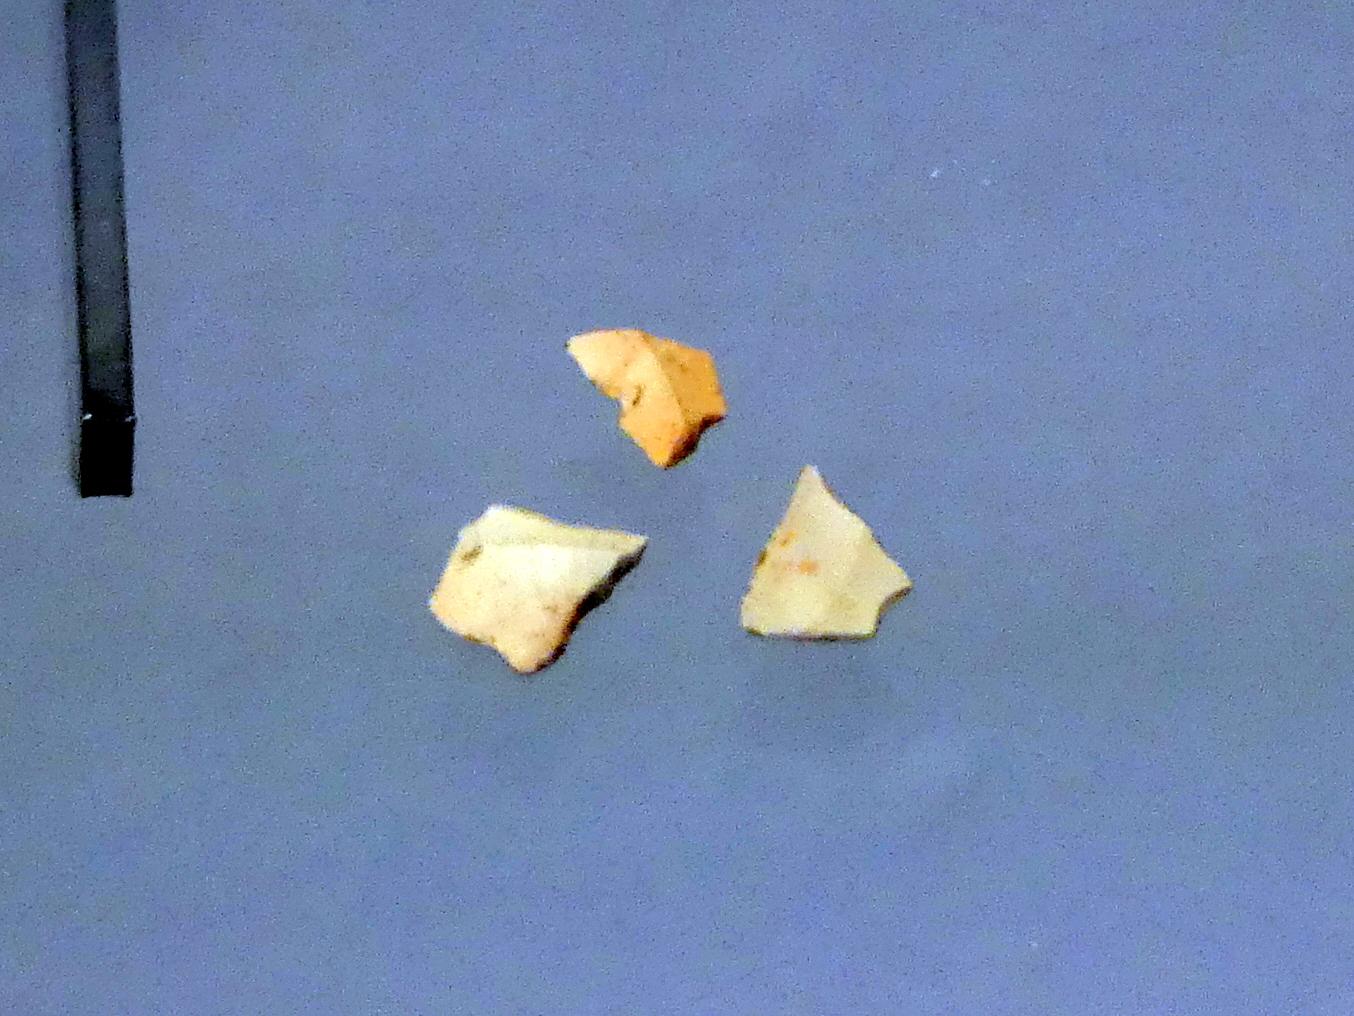 3 Querschneider, Mesolithikum, 9500 - 5500 v. Chr., Bild 1/2